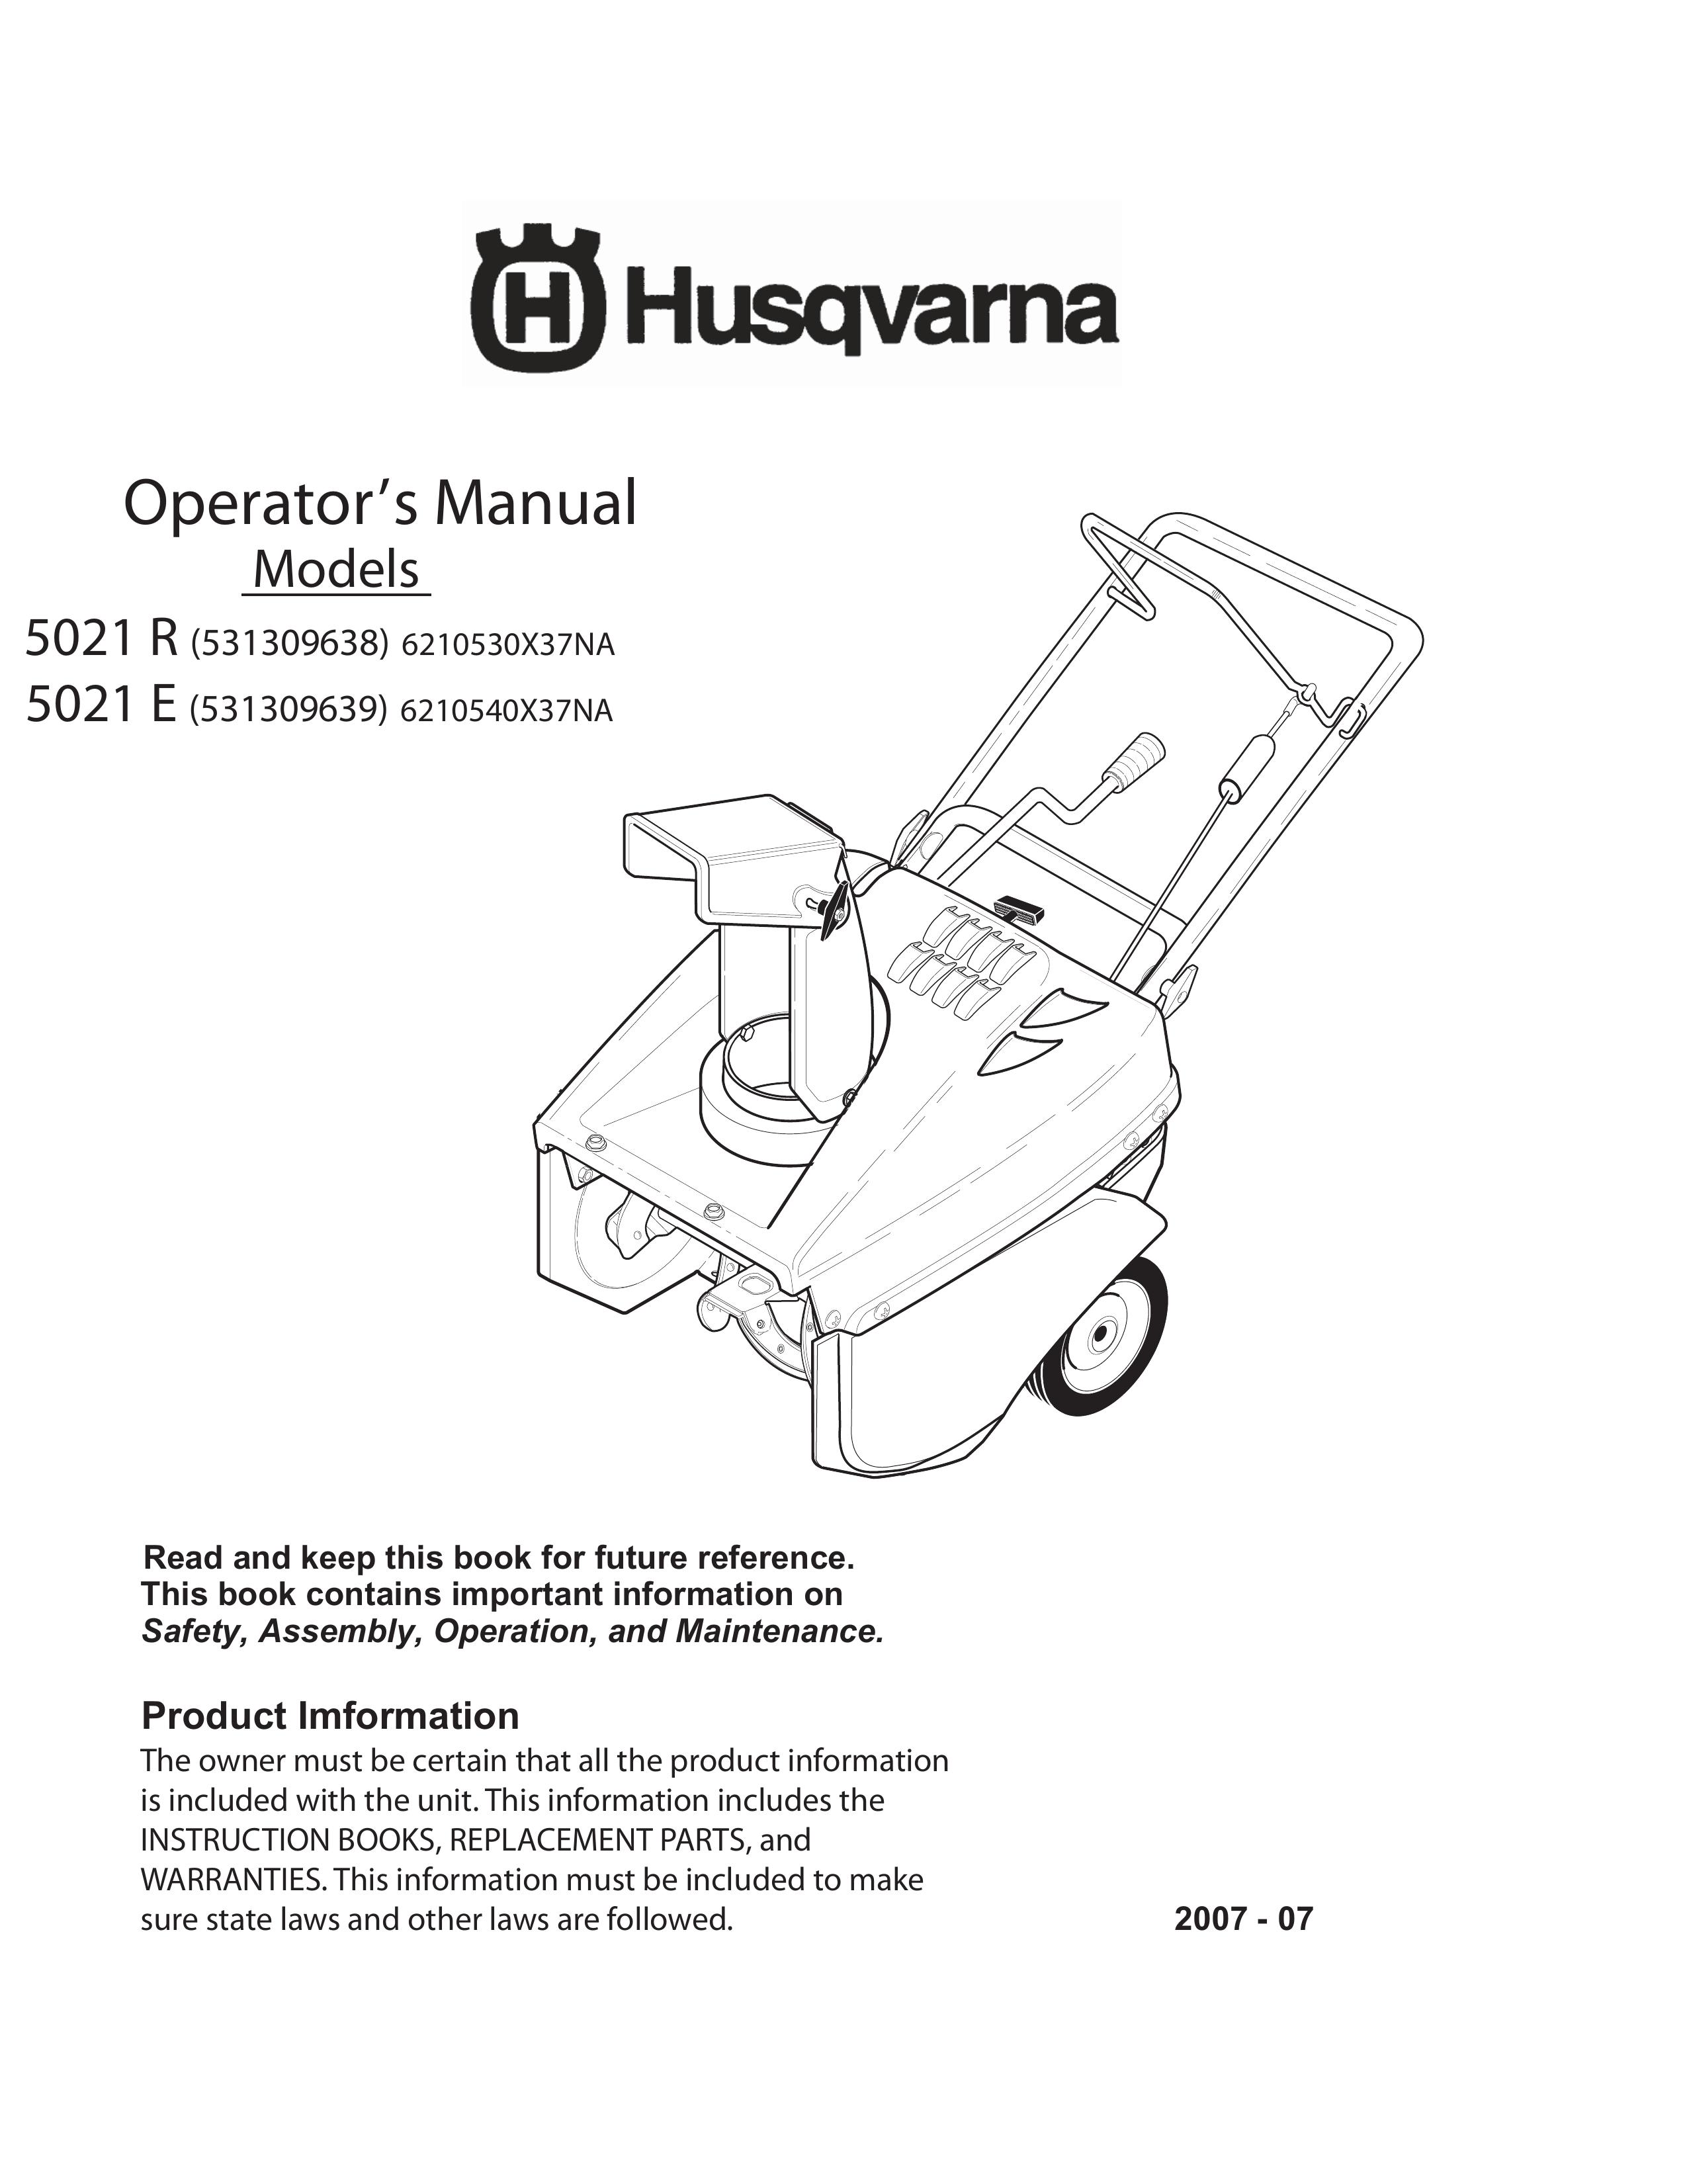 Husqvarna 5021 R Snow Blower User Manual